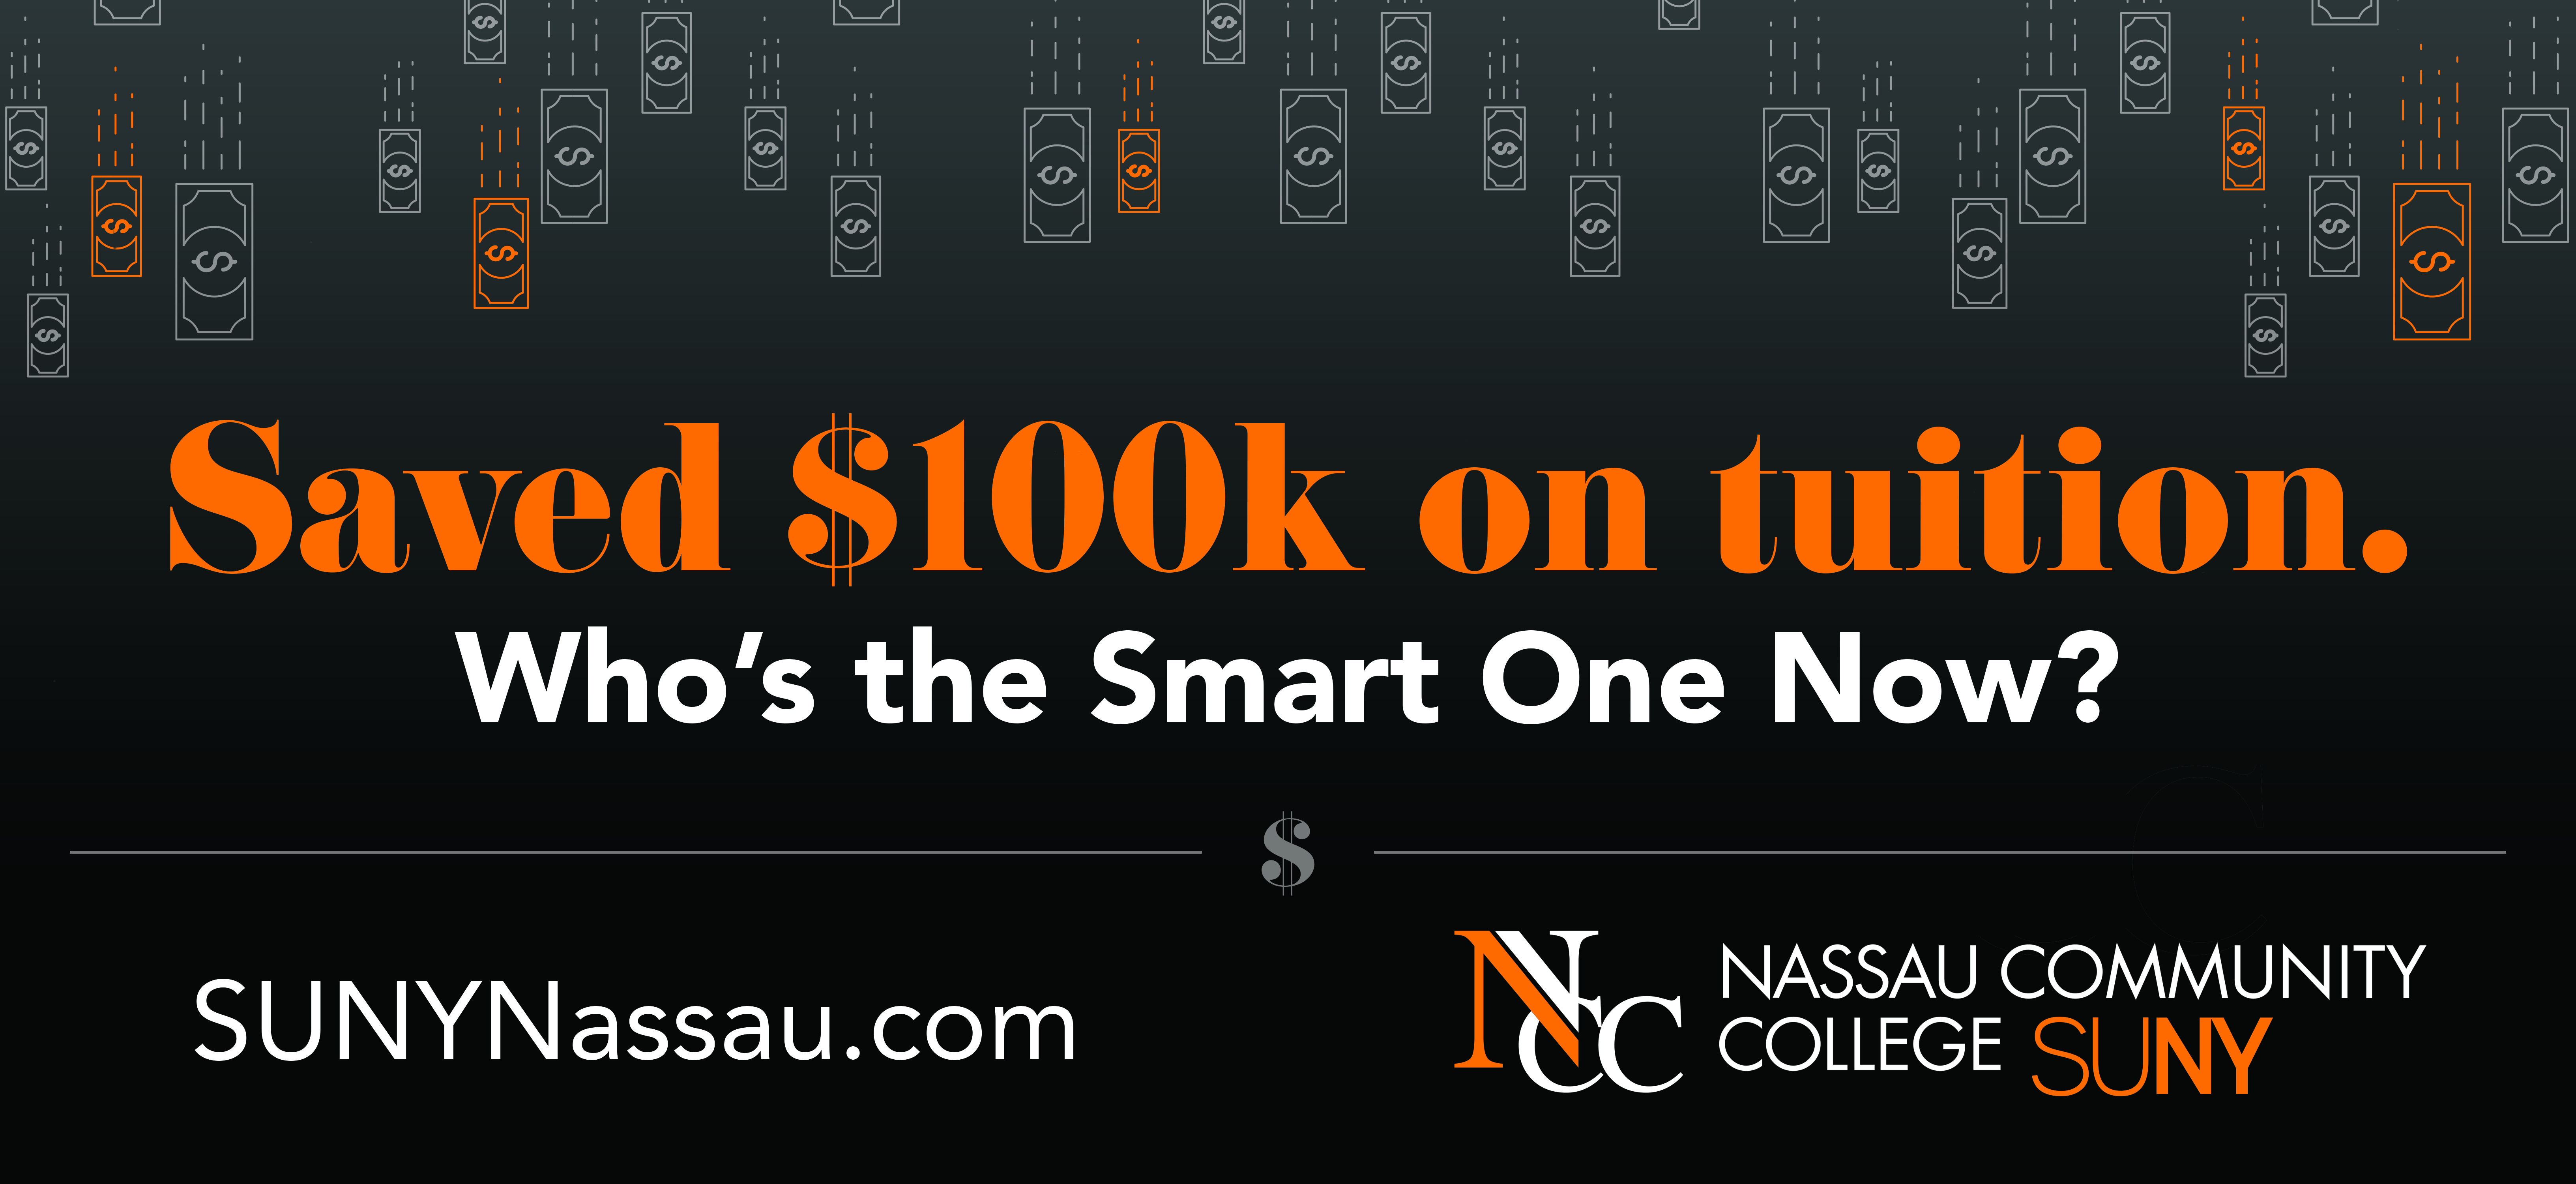 Saved $100,000 on tuition, Who's the smart one now, SUNYNassau.com